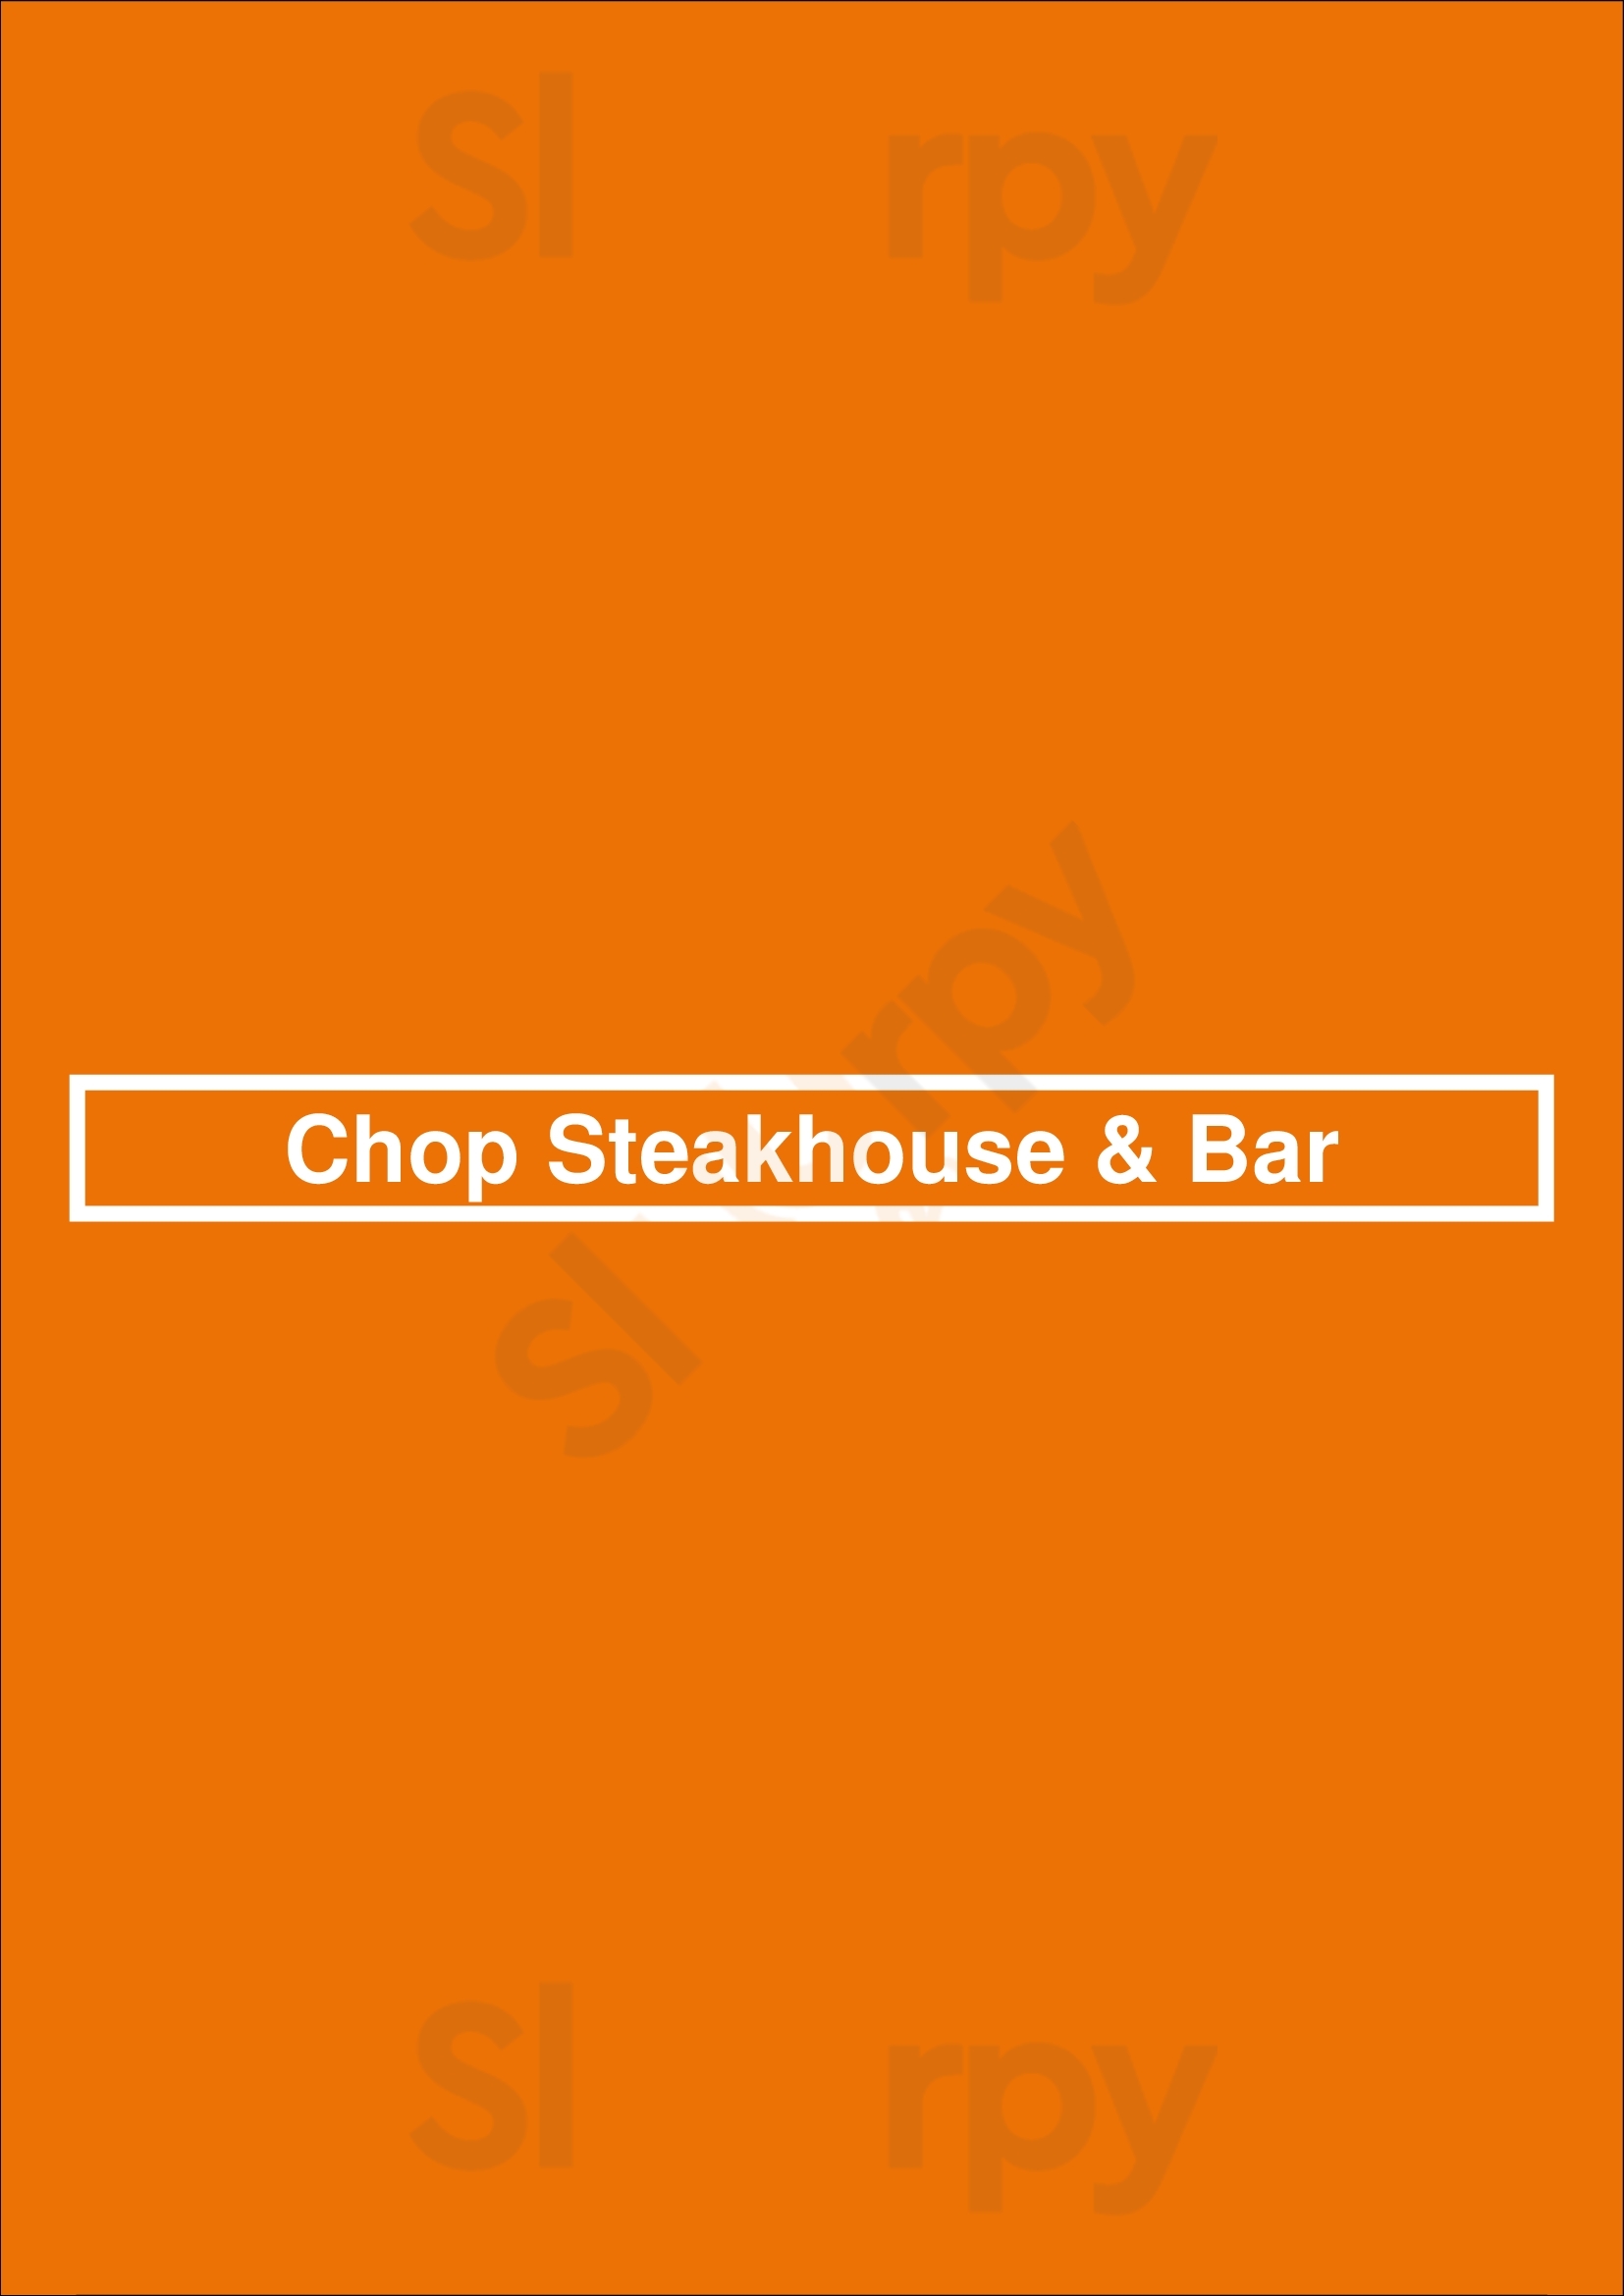 Chop Steakhouse & Bar London Menu - 1